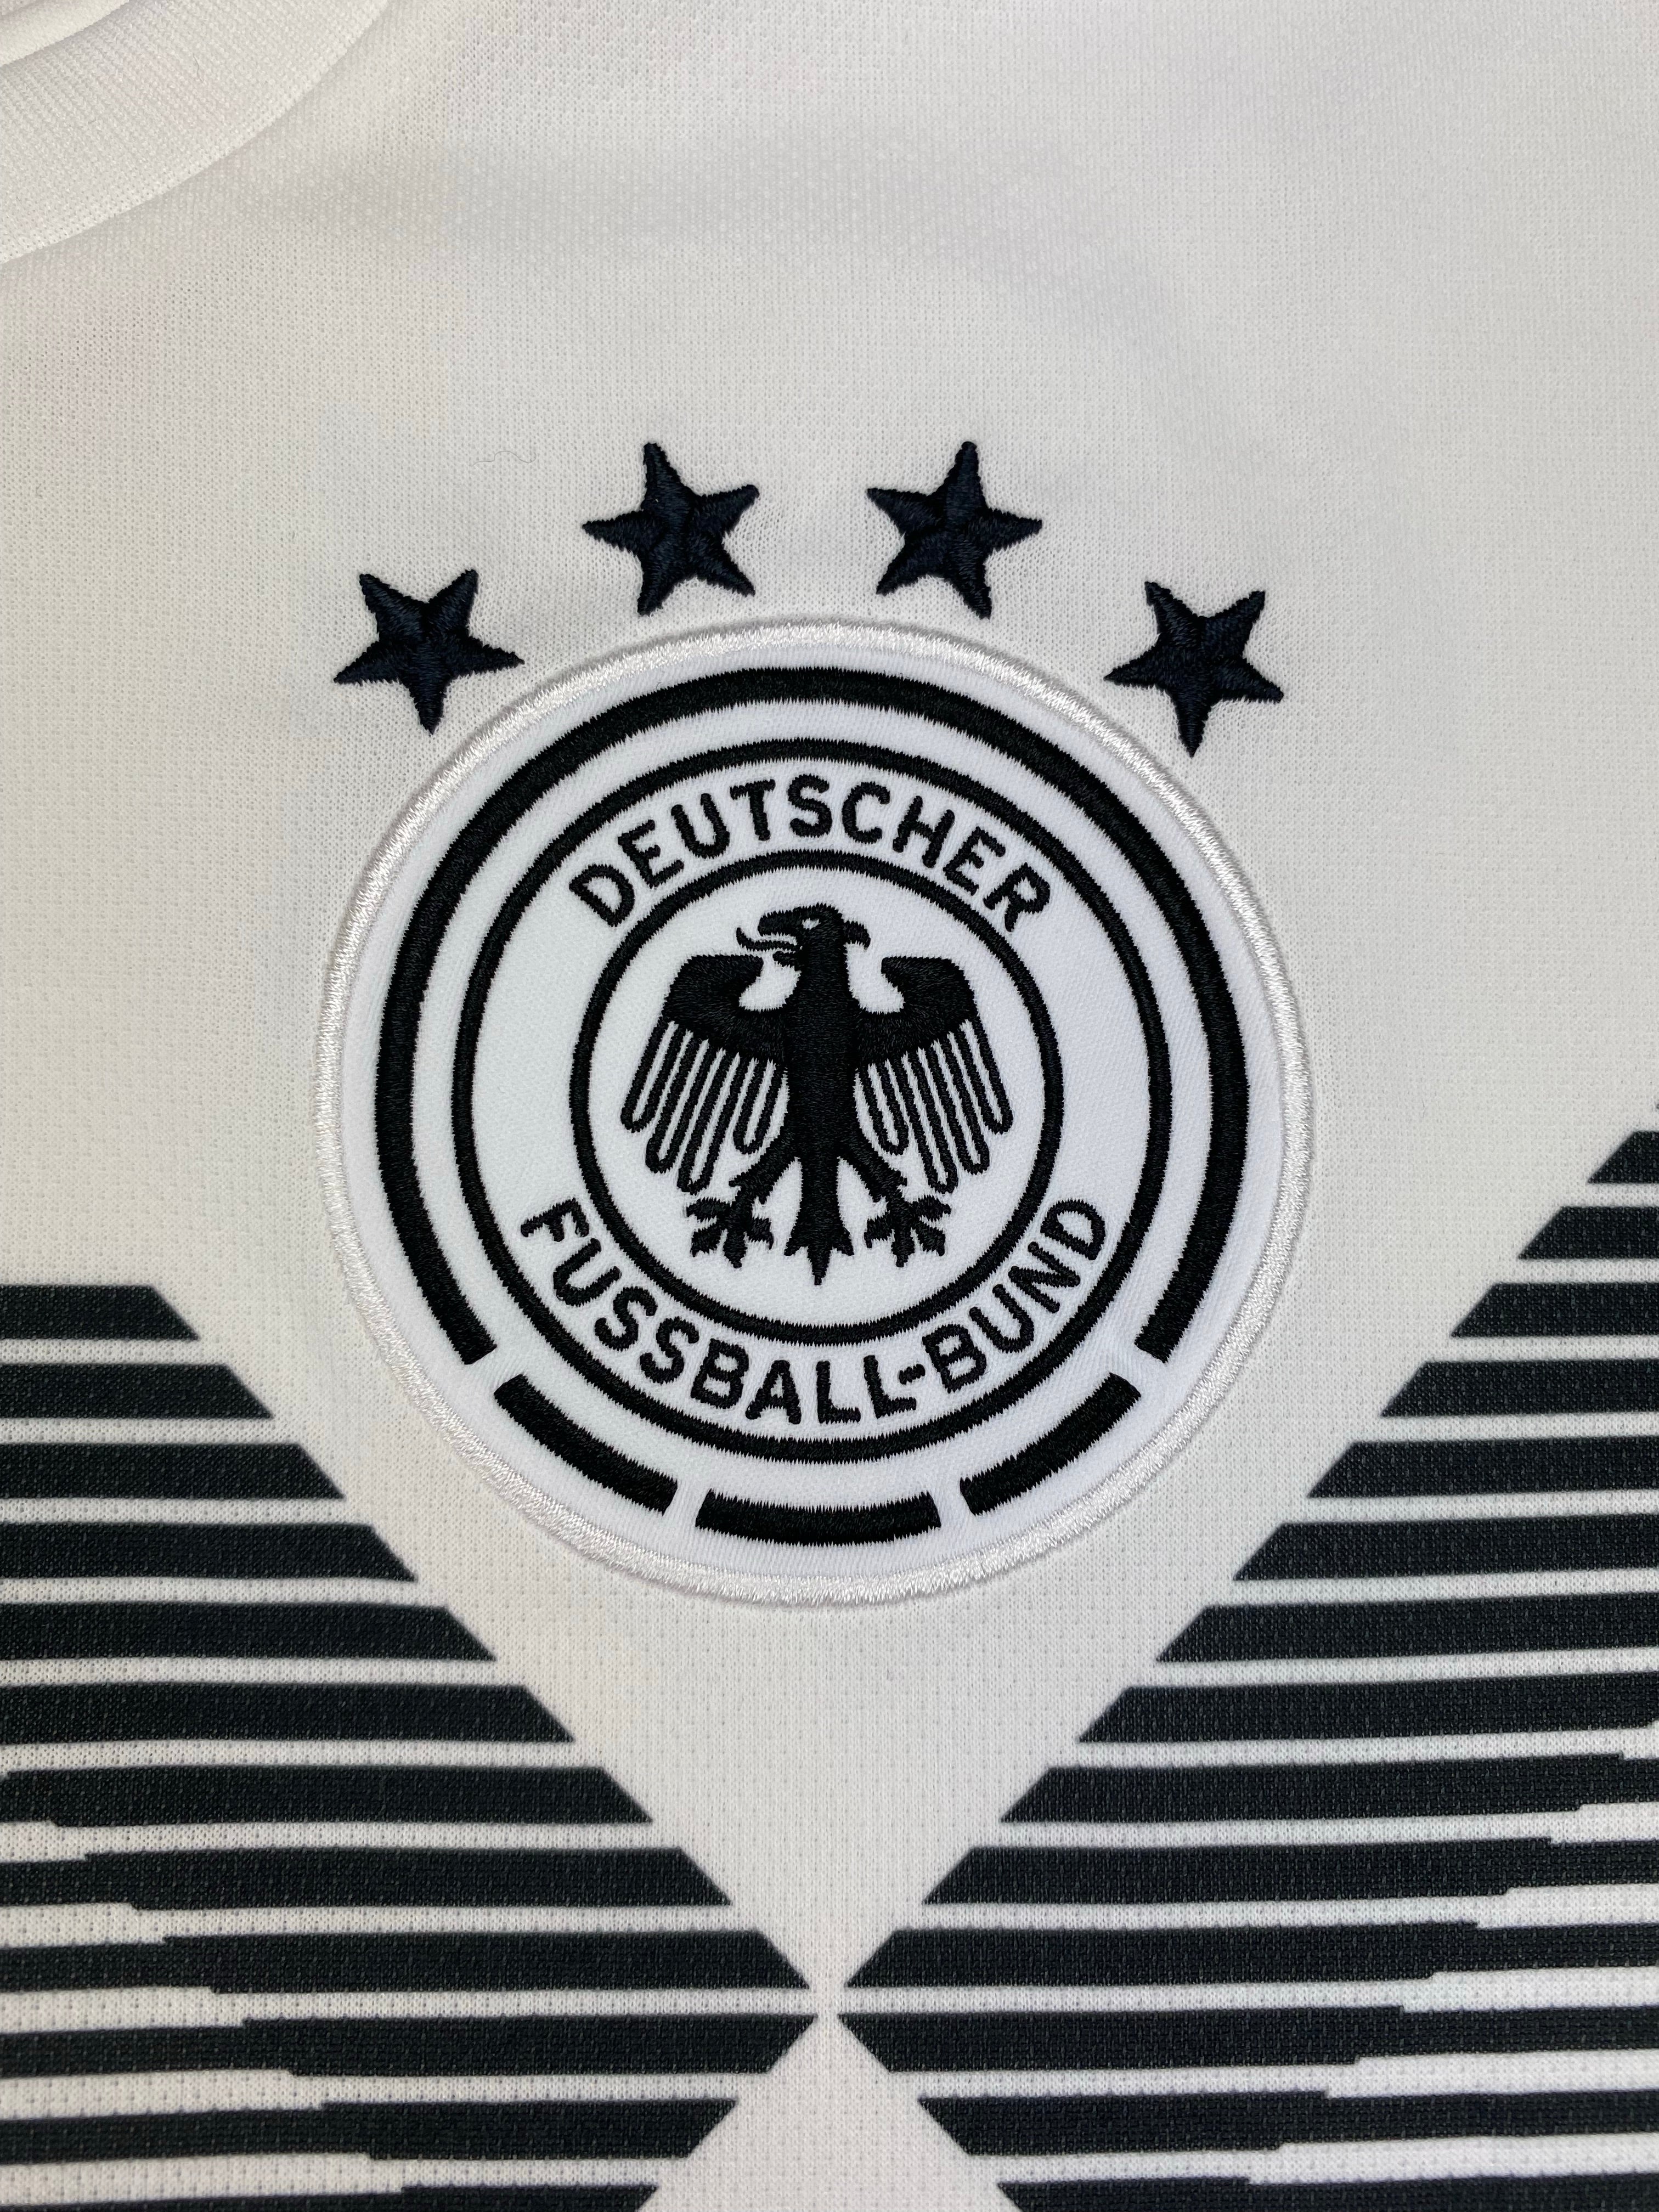 2018/19 Germany Home Shirt (XL) 9.5/10